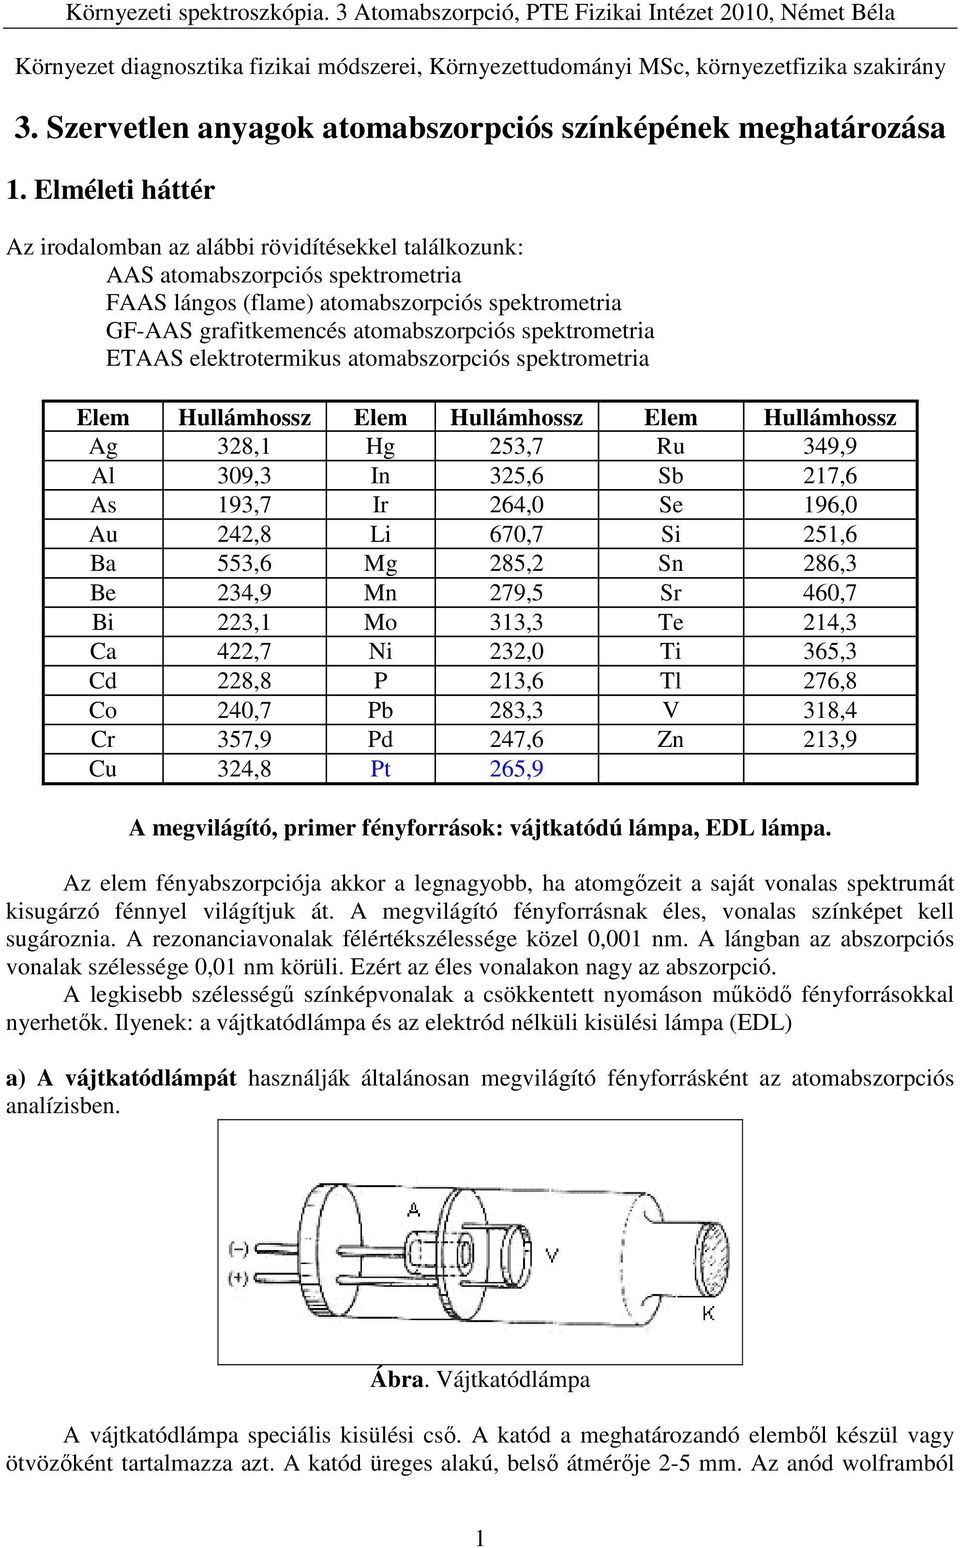 spektrometria ETAAS elektrotermikus atomabszorpciós spektrometria Elem Hullámhossz Elem Hullámhossz Elem Hullámhossz Ag 328,1 Hg 253,7 Ru 349,9 Al 309,3 In 325,6 Sb 217,6 As 193,7 Ir 264,0 Se 196,0